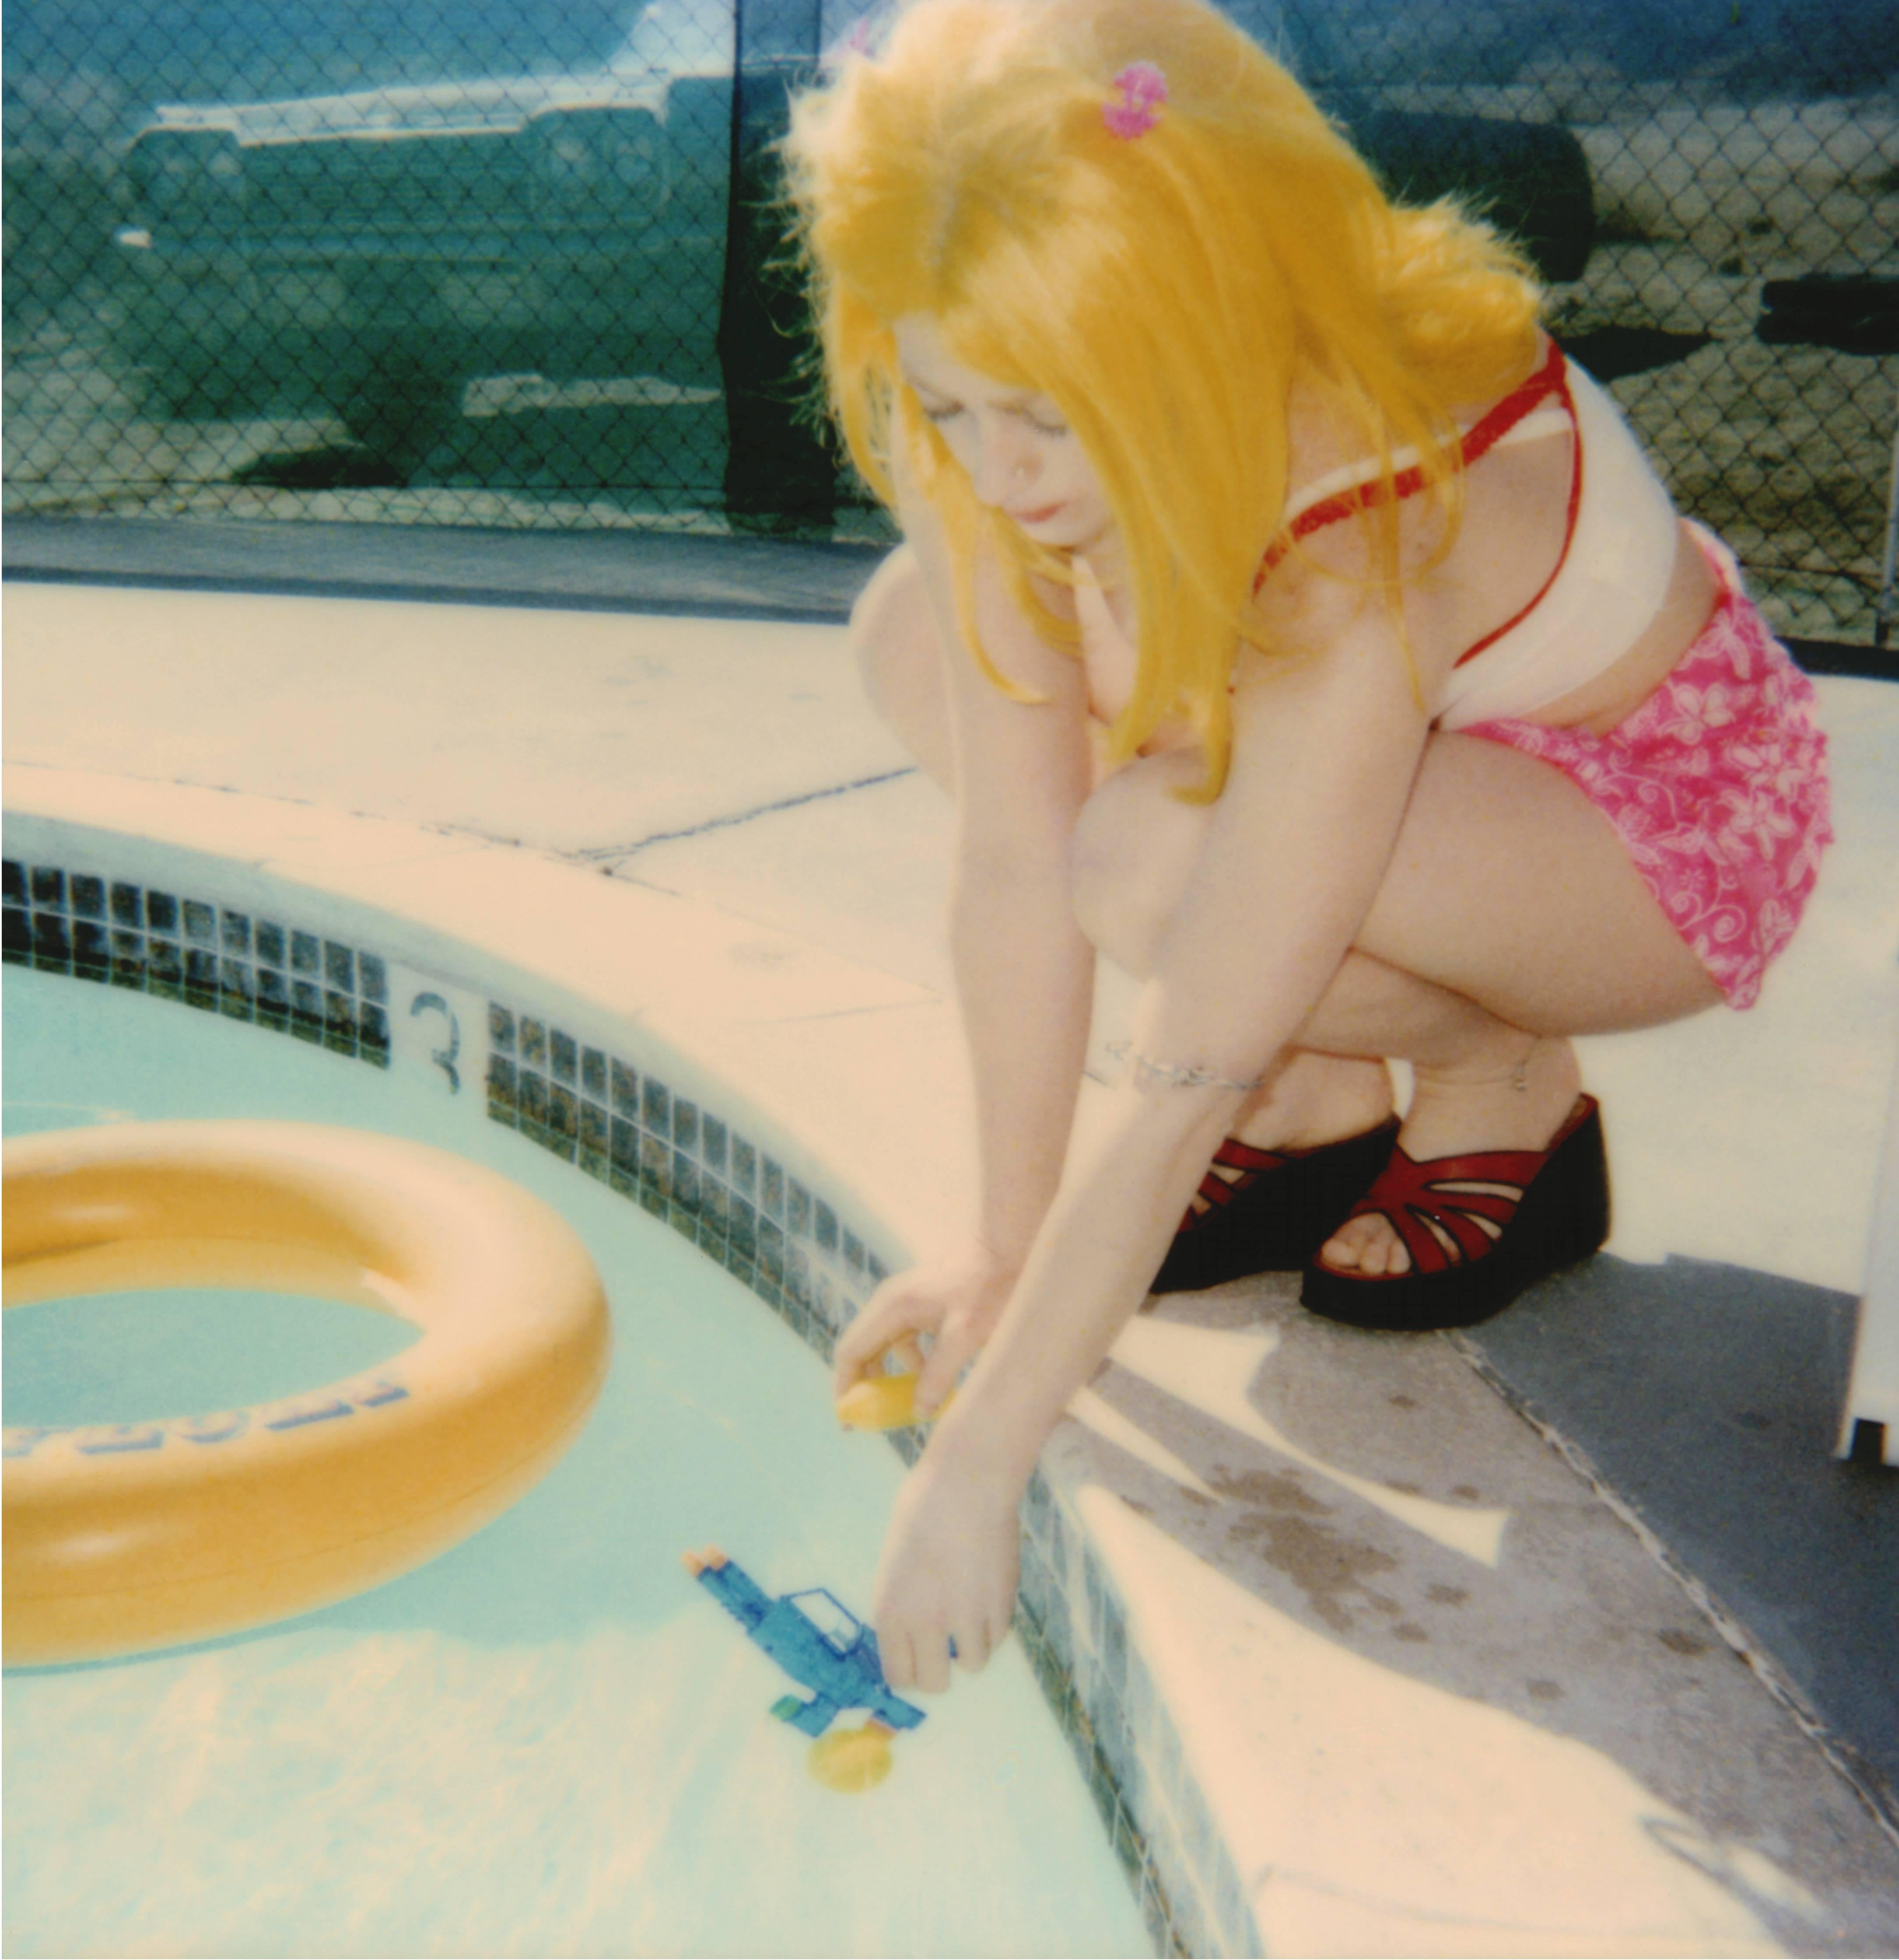 Stefanie Schneider Portrait Photograph - Max by the Pool (29 Palms, CA)